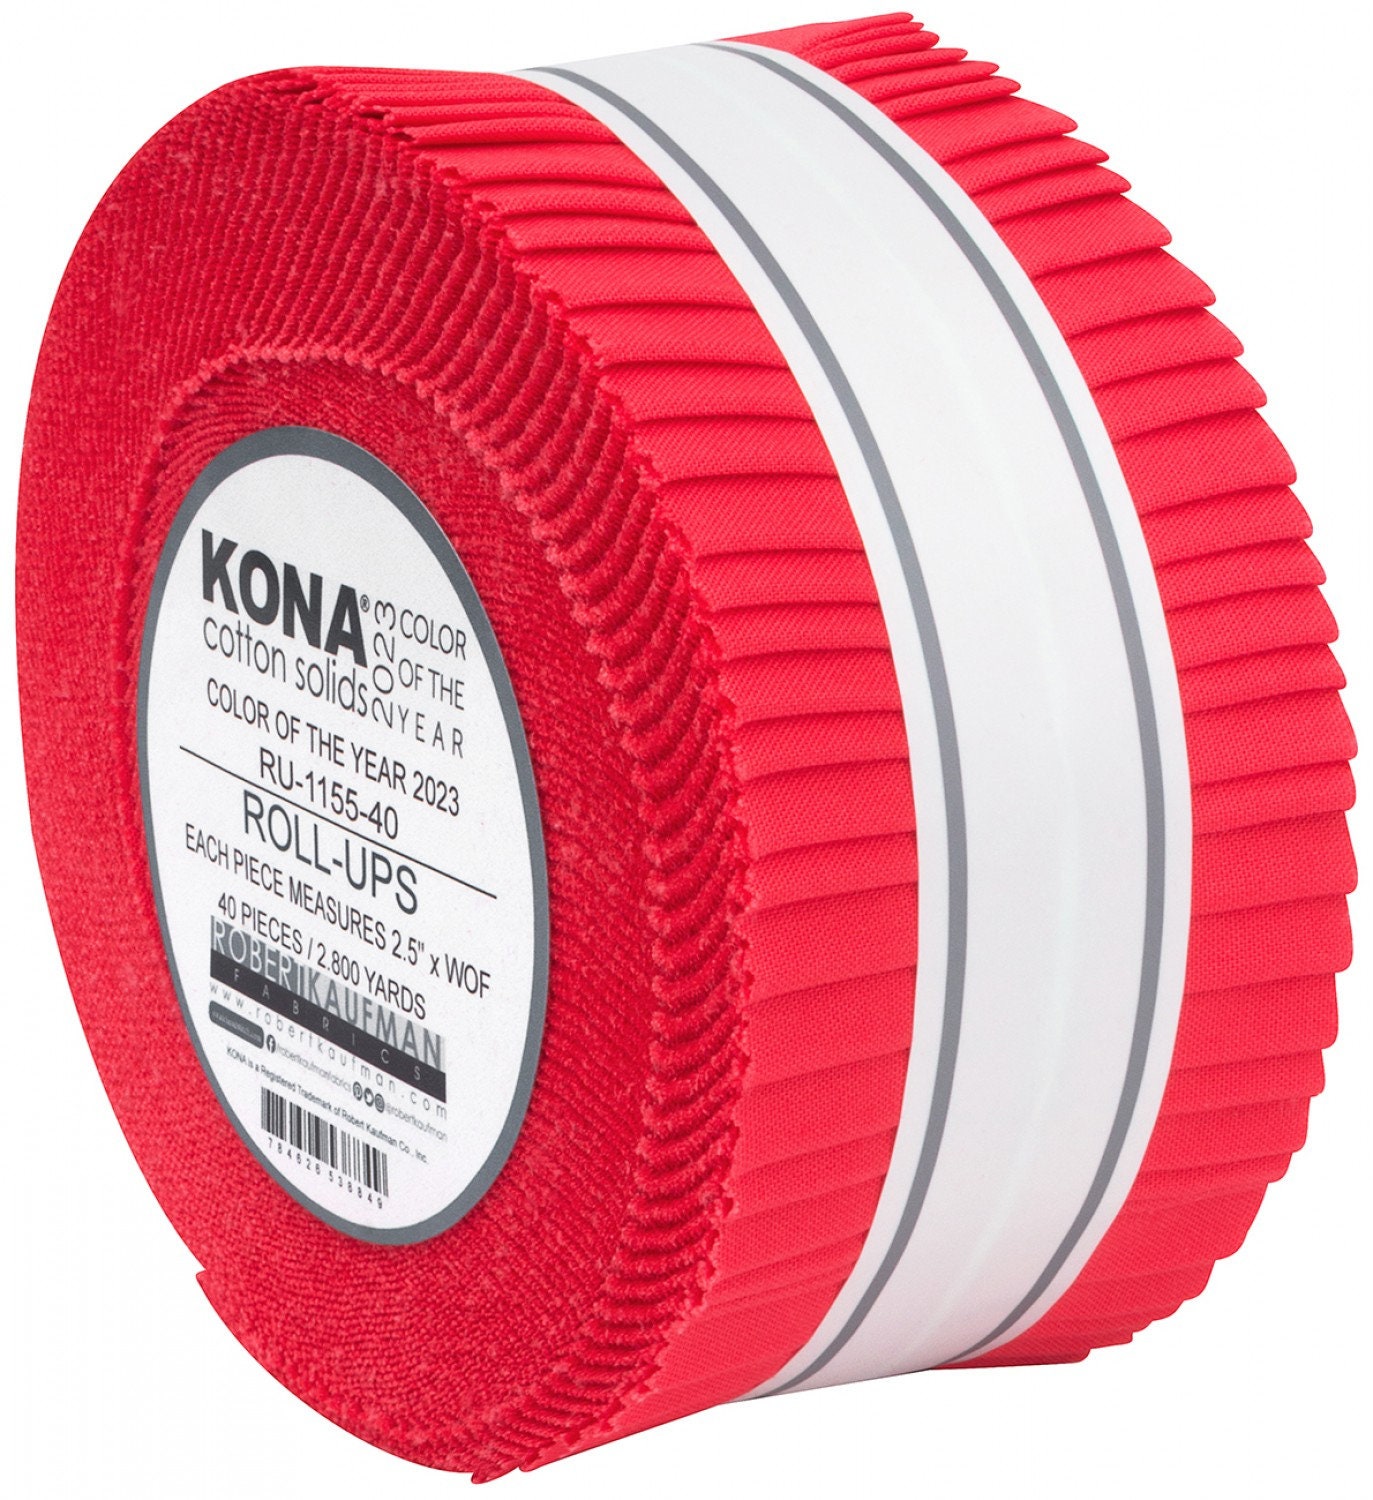 Robert Kaufman Fabrics RU-232-41 Kona Cotton Solids New Dark Roll Up 41  2.5-inch Strips Jelly Roll Assorted Single